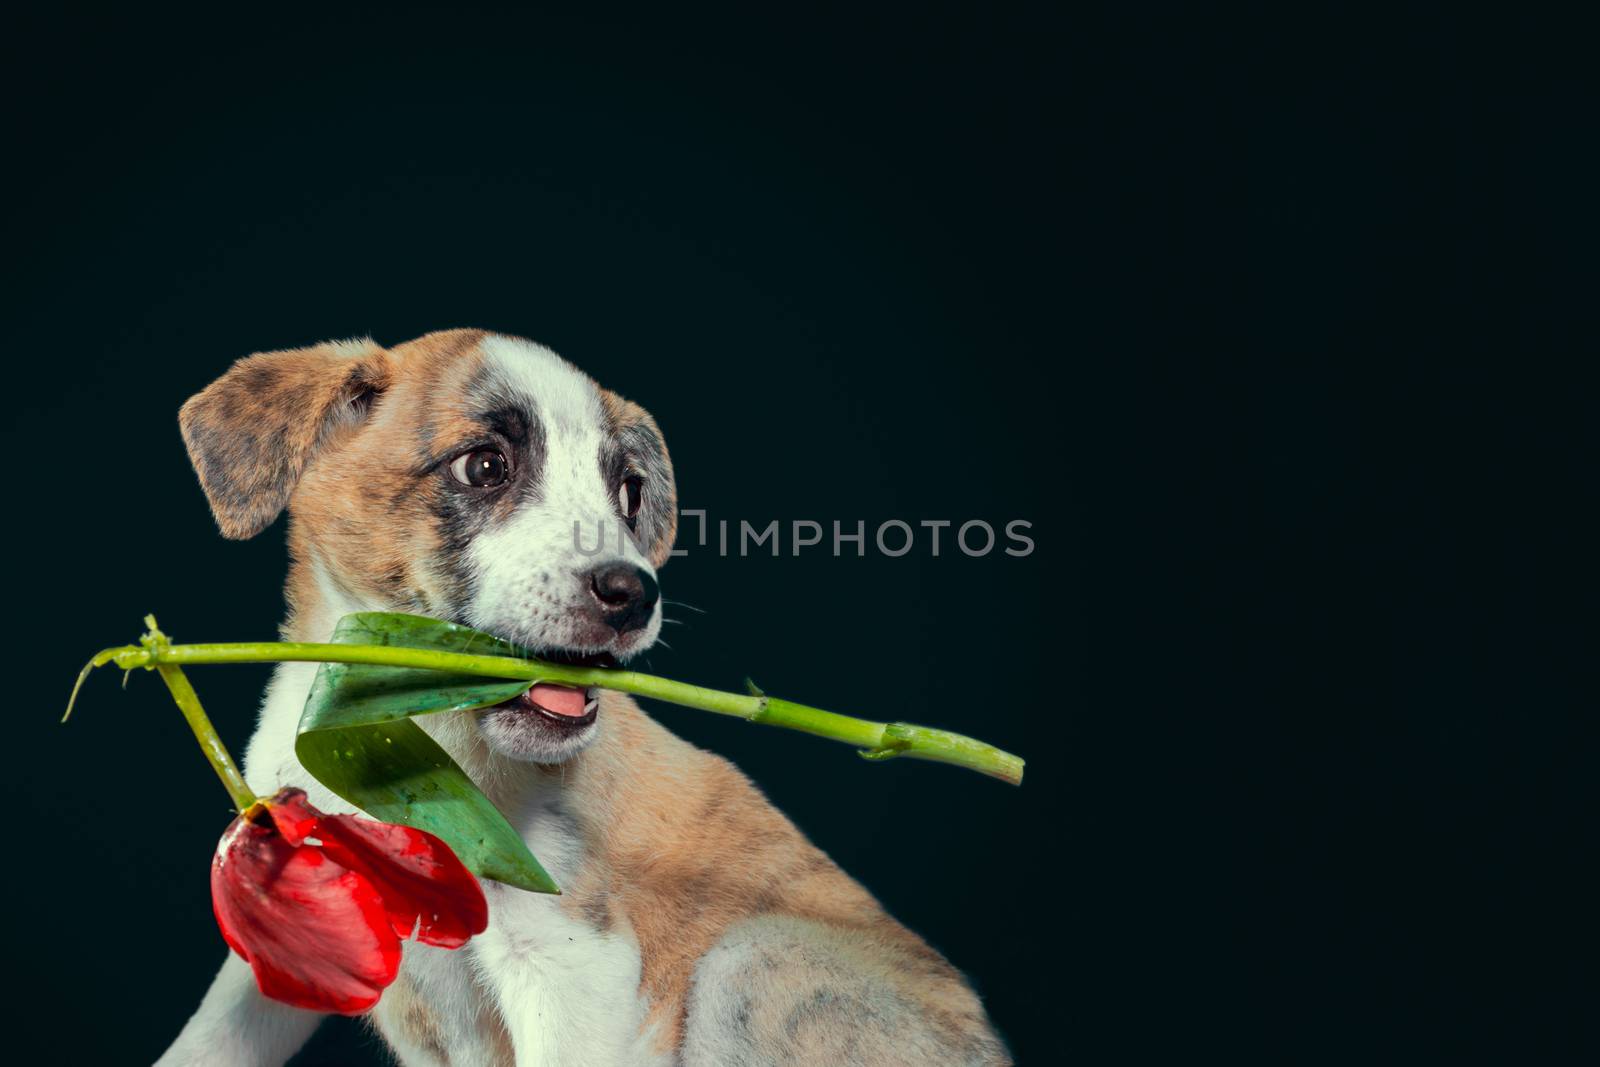 piebald puppy keeping in teeth a tulip flower at dark background by Gera8th